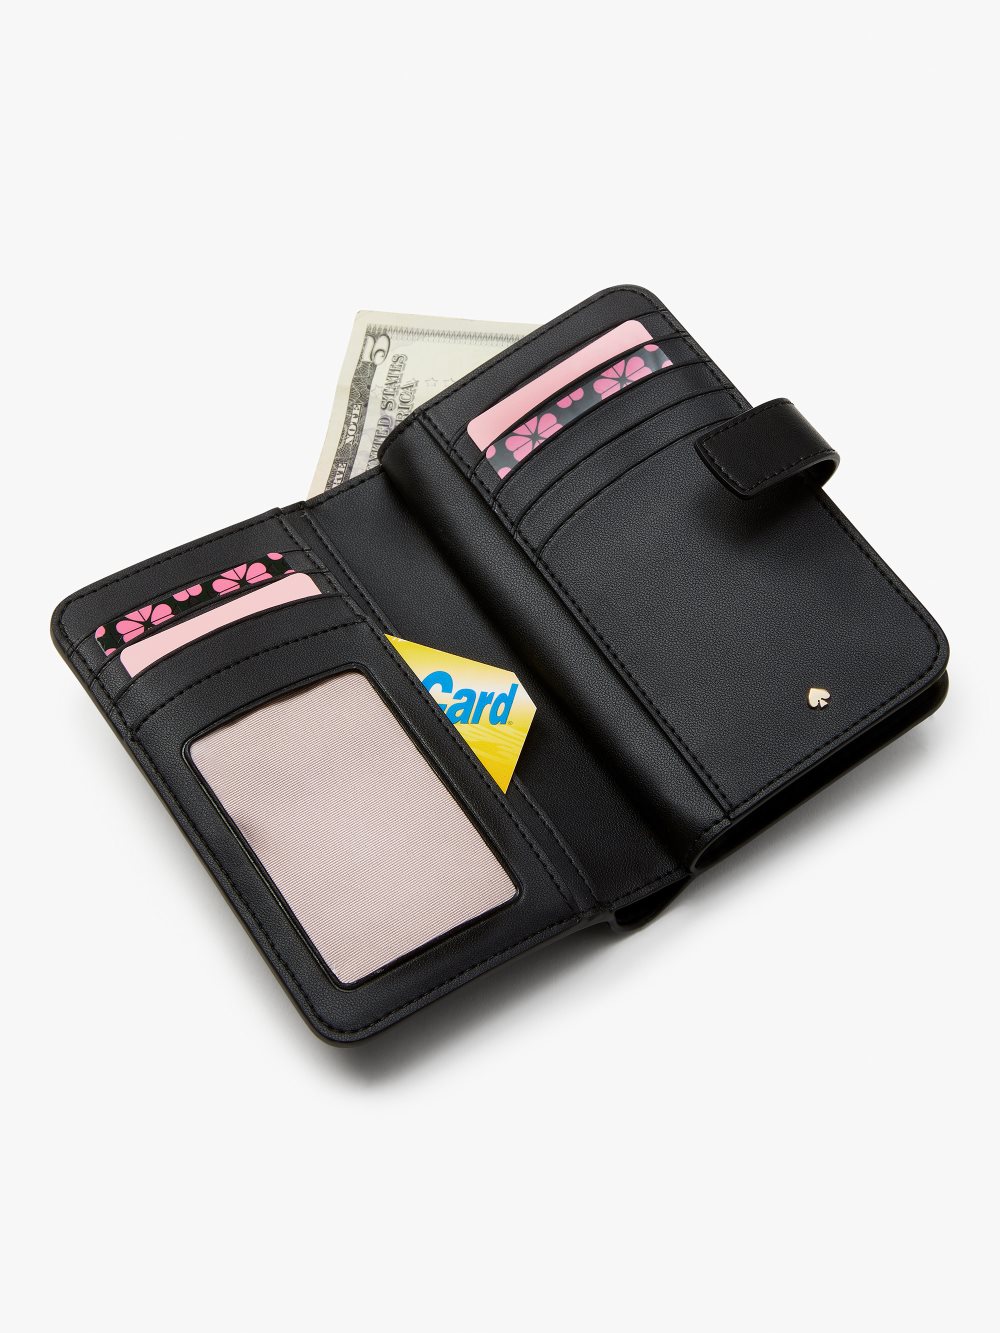 Women's pink multi. spencer grapefruit compact wallet | Kate Spade